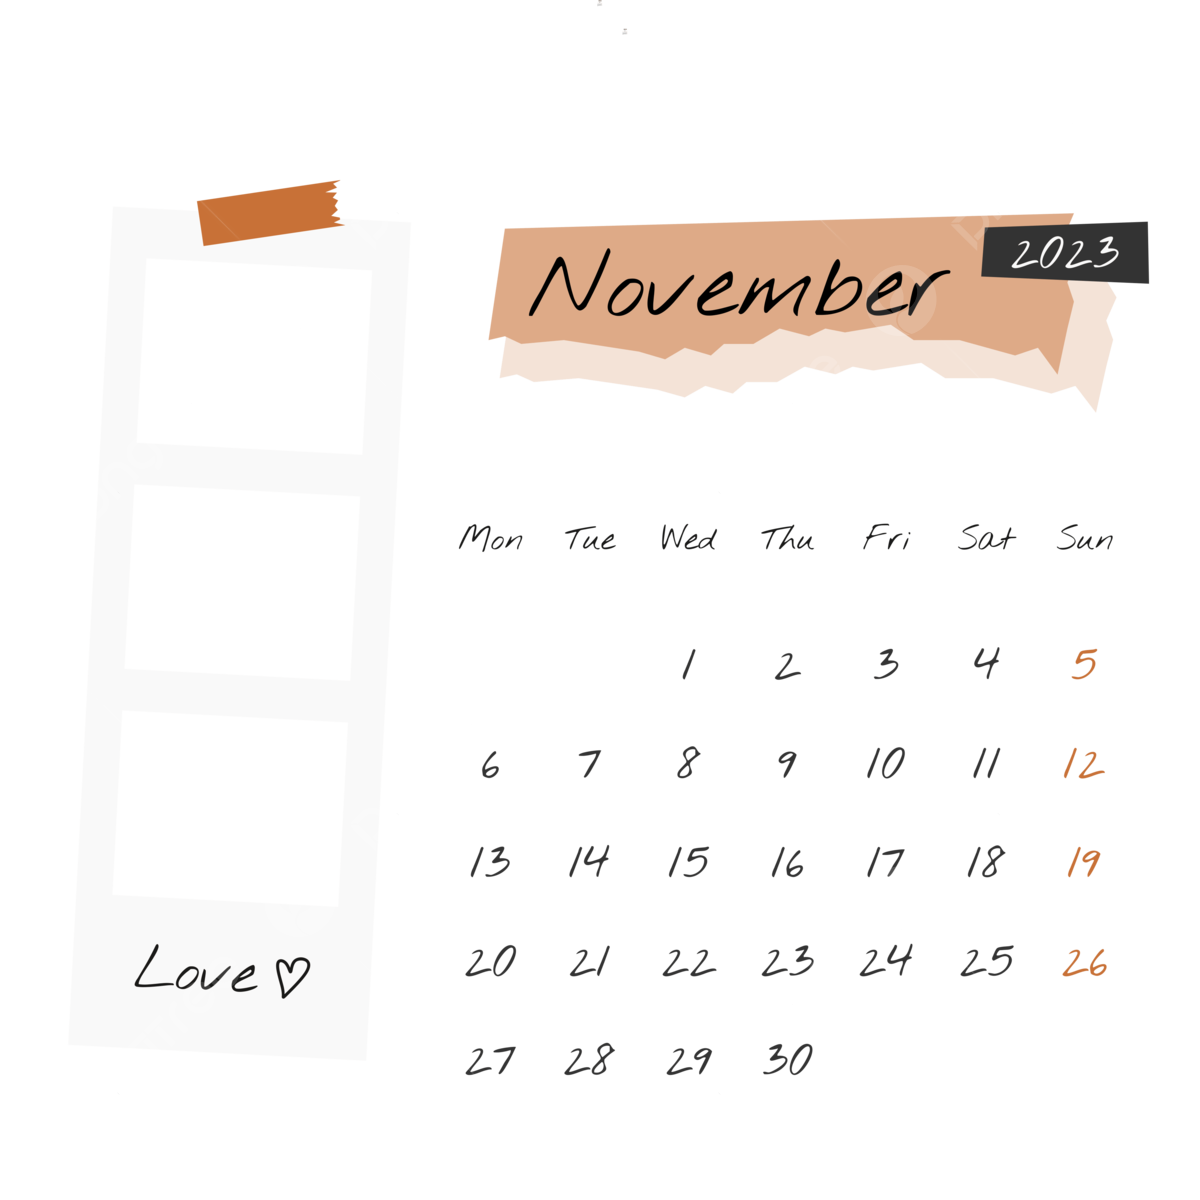 Calendar November Vector Hd Image, November 2023 Calendar With Polaroid Frame, November 2023, November, Kalender November PNG Image For Free Download